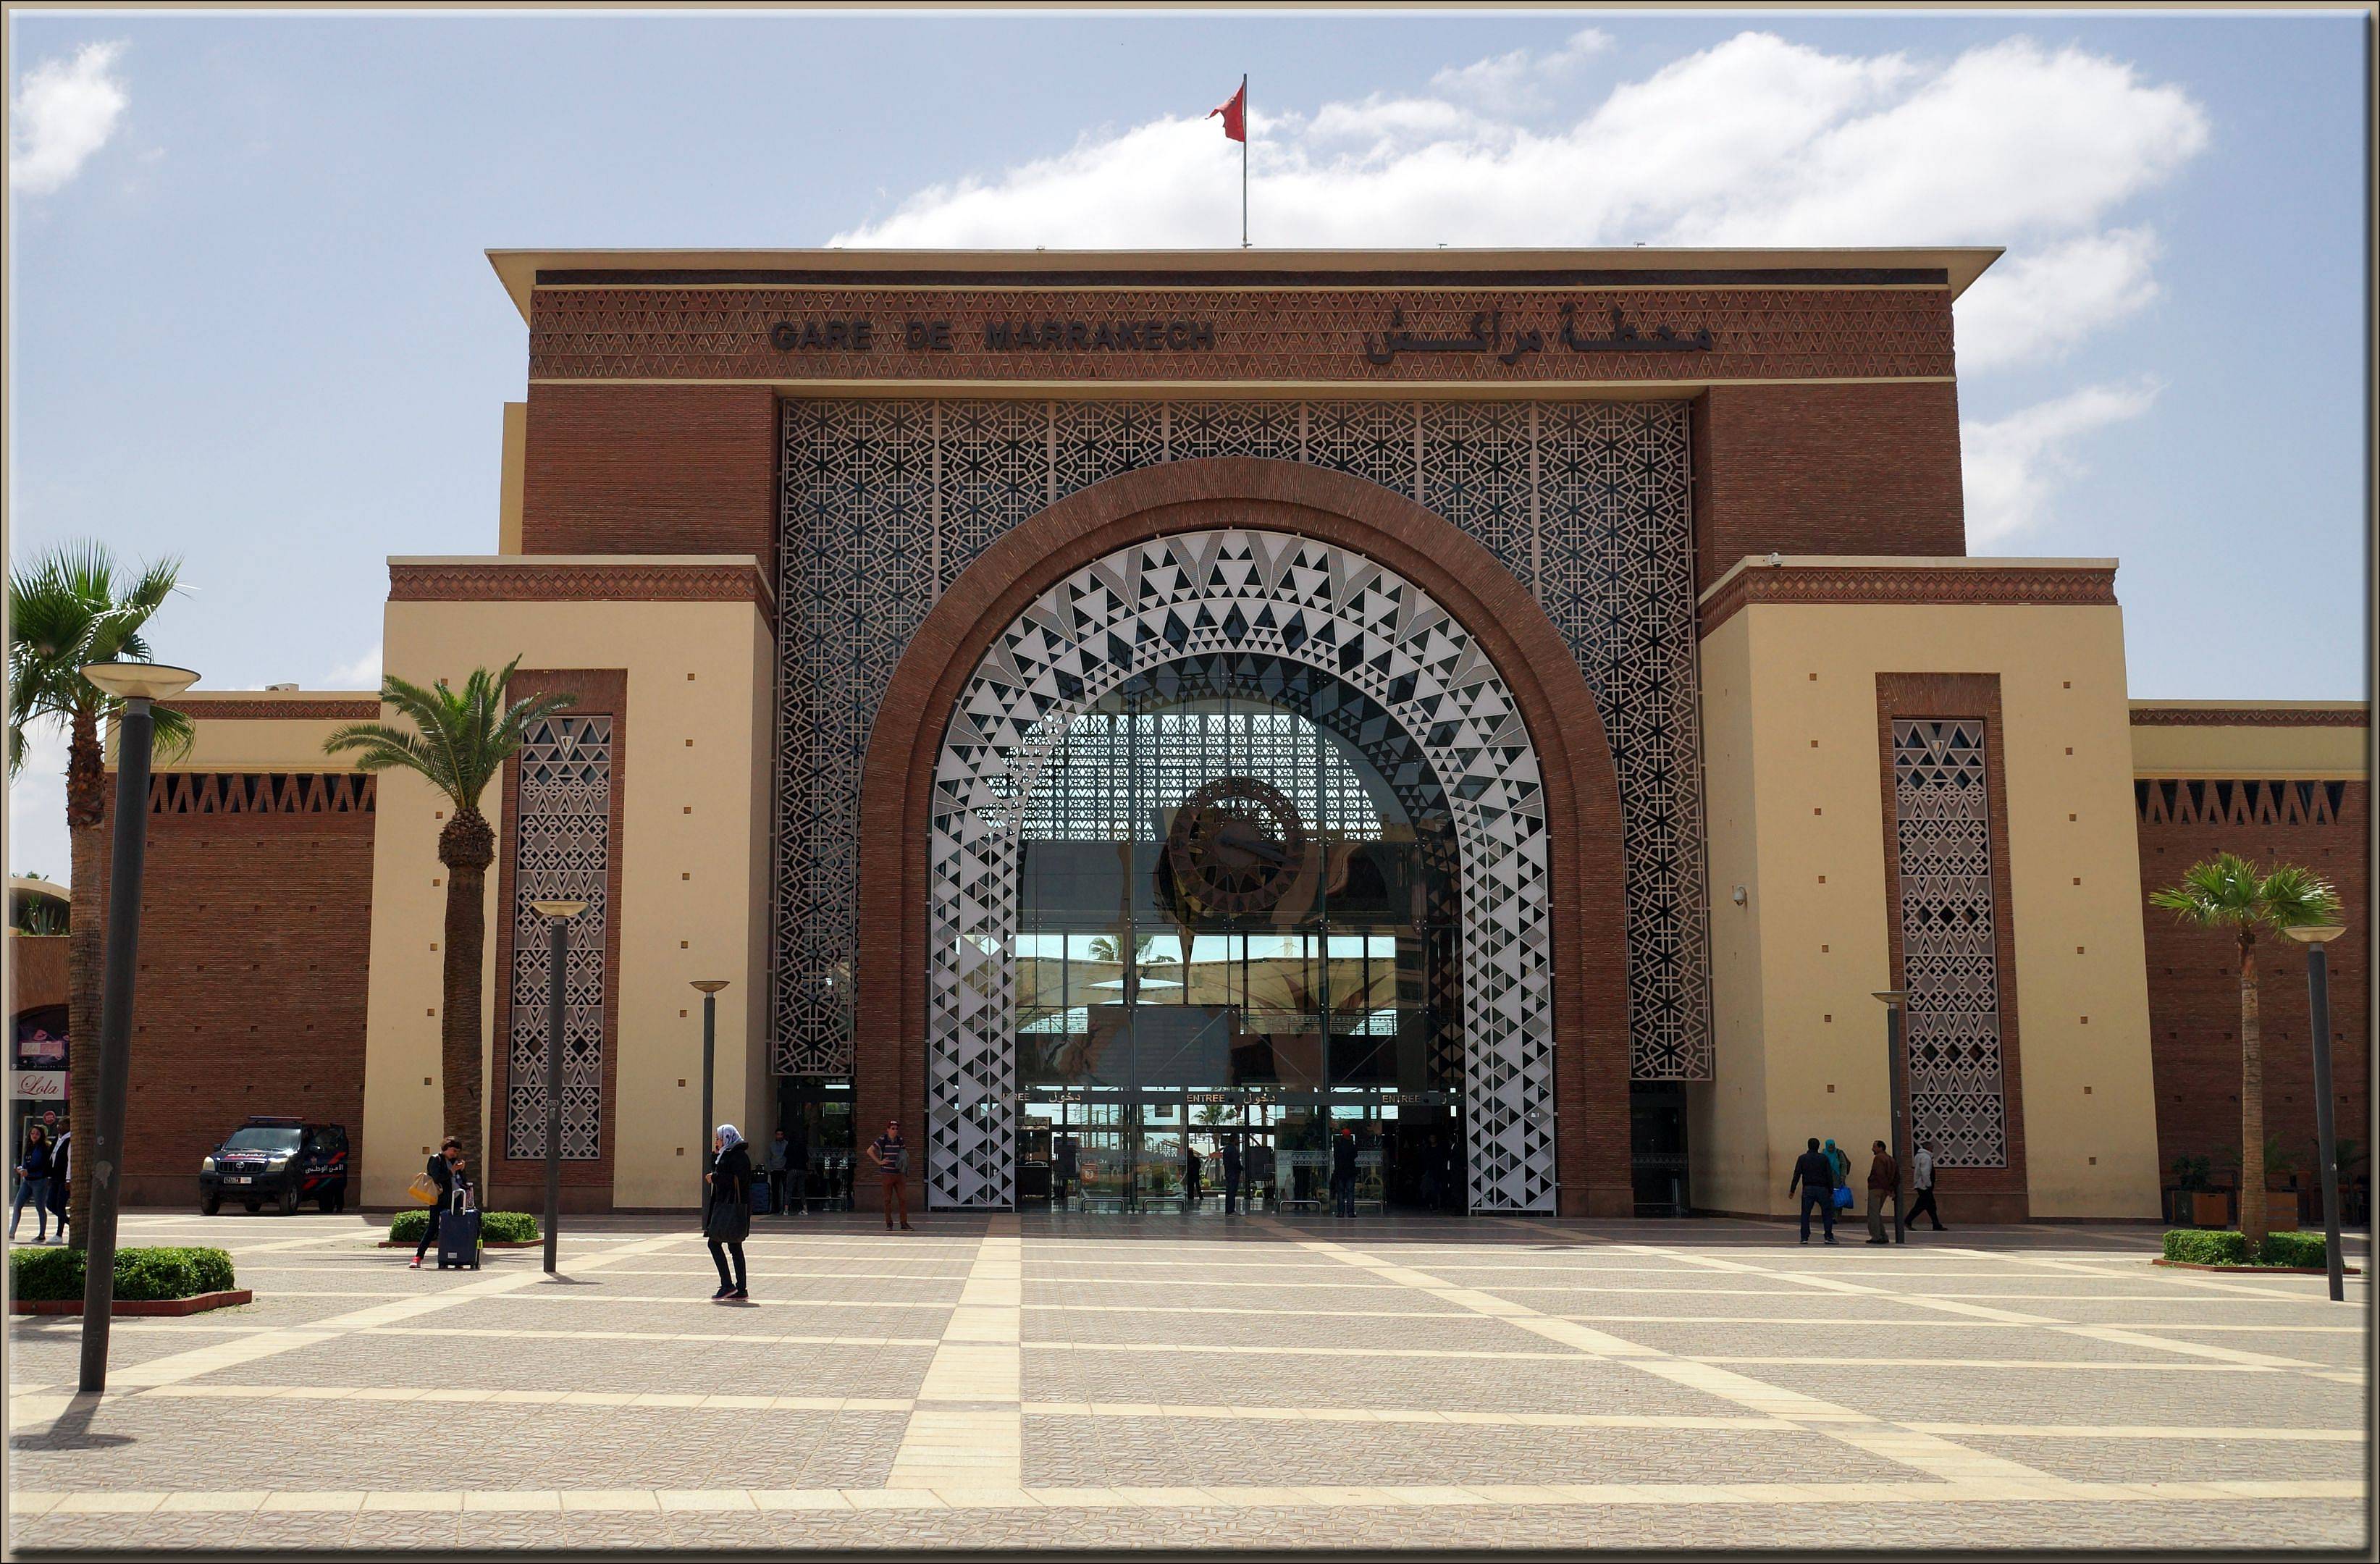 L'antica moschea di Tinmel e ritorno a Marrakech